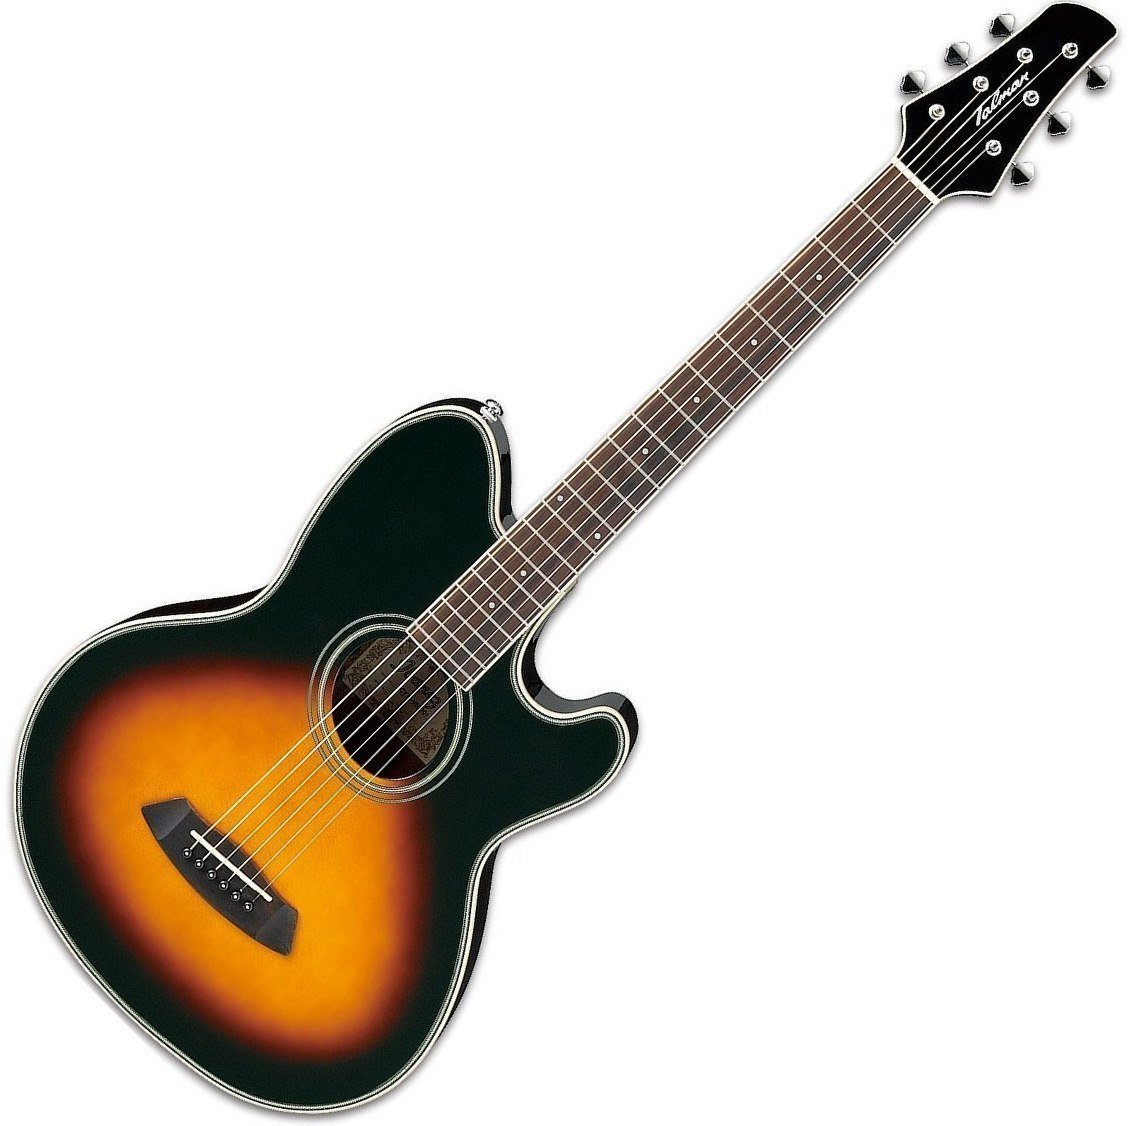 Electro-acoustic guitar Ibanez Tcy 70 Vintage Sunburst